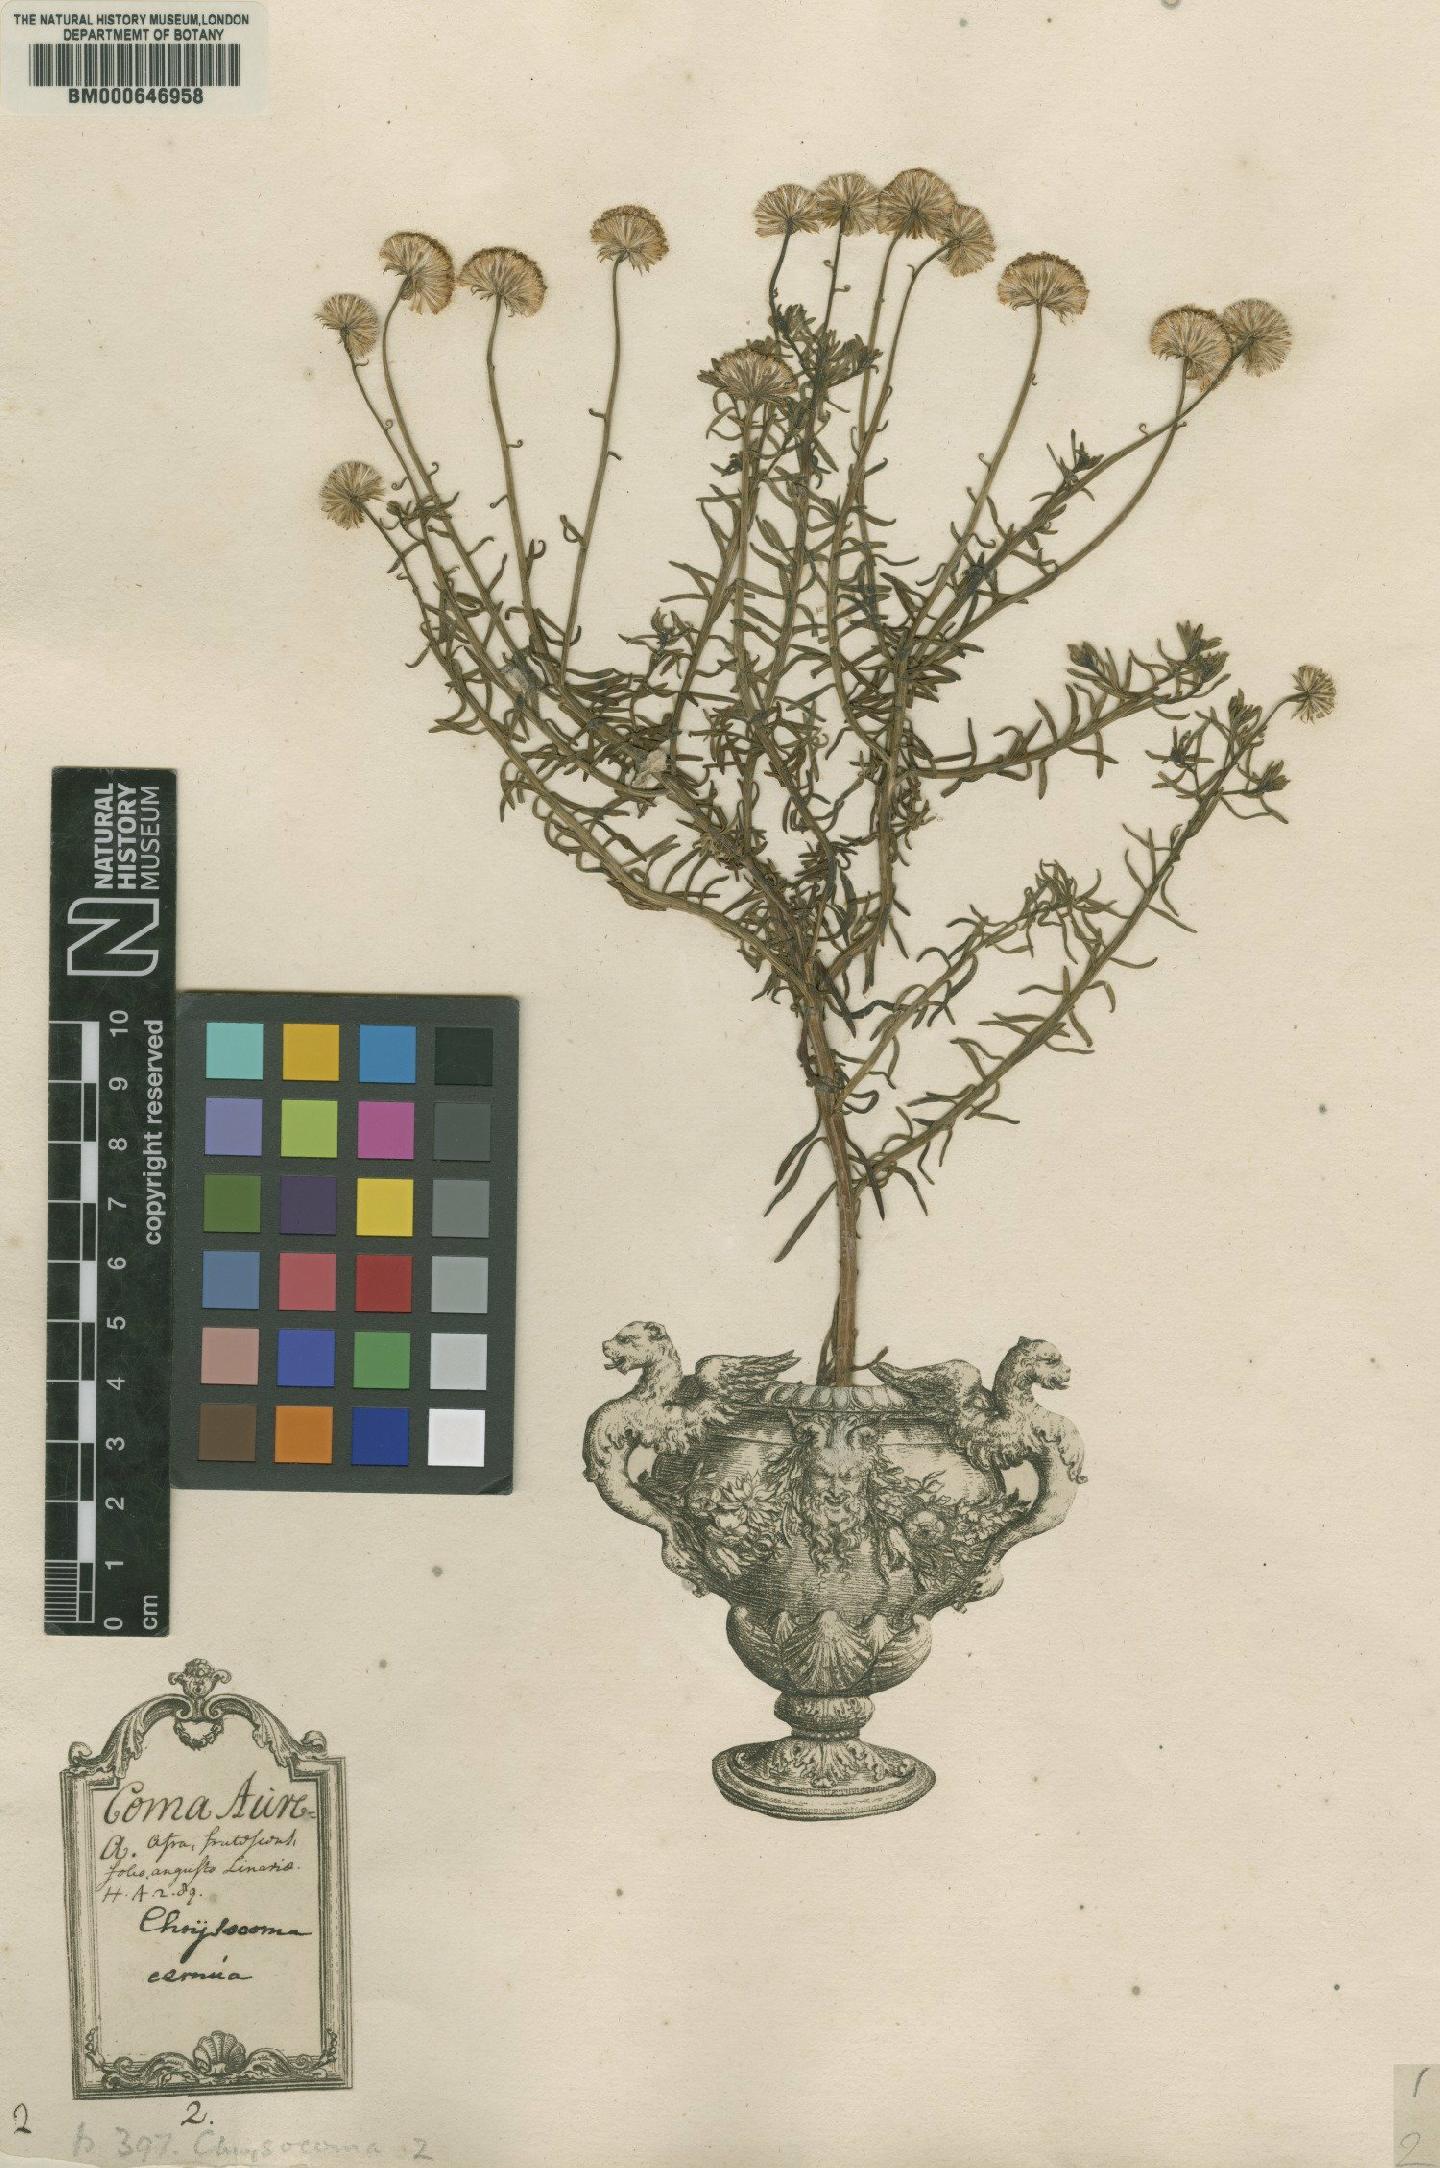 To NHMUK collection (Chrysocoma coma-aurea L.; Original material; NHMUK:ecatalogue:4702085)